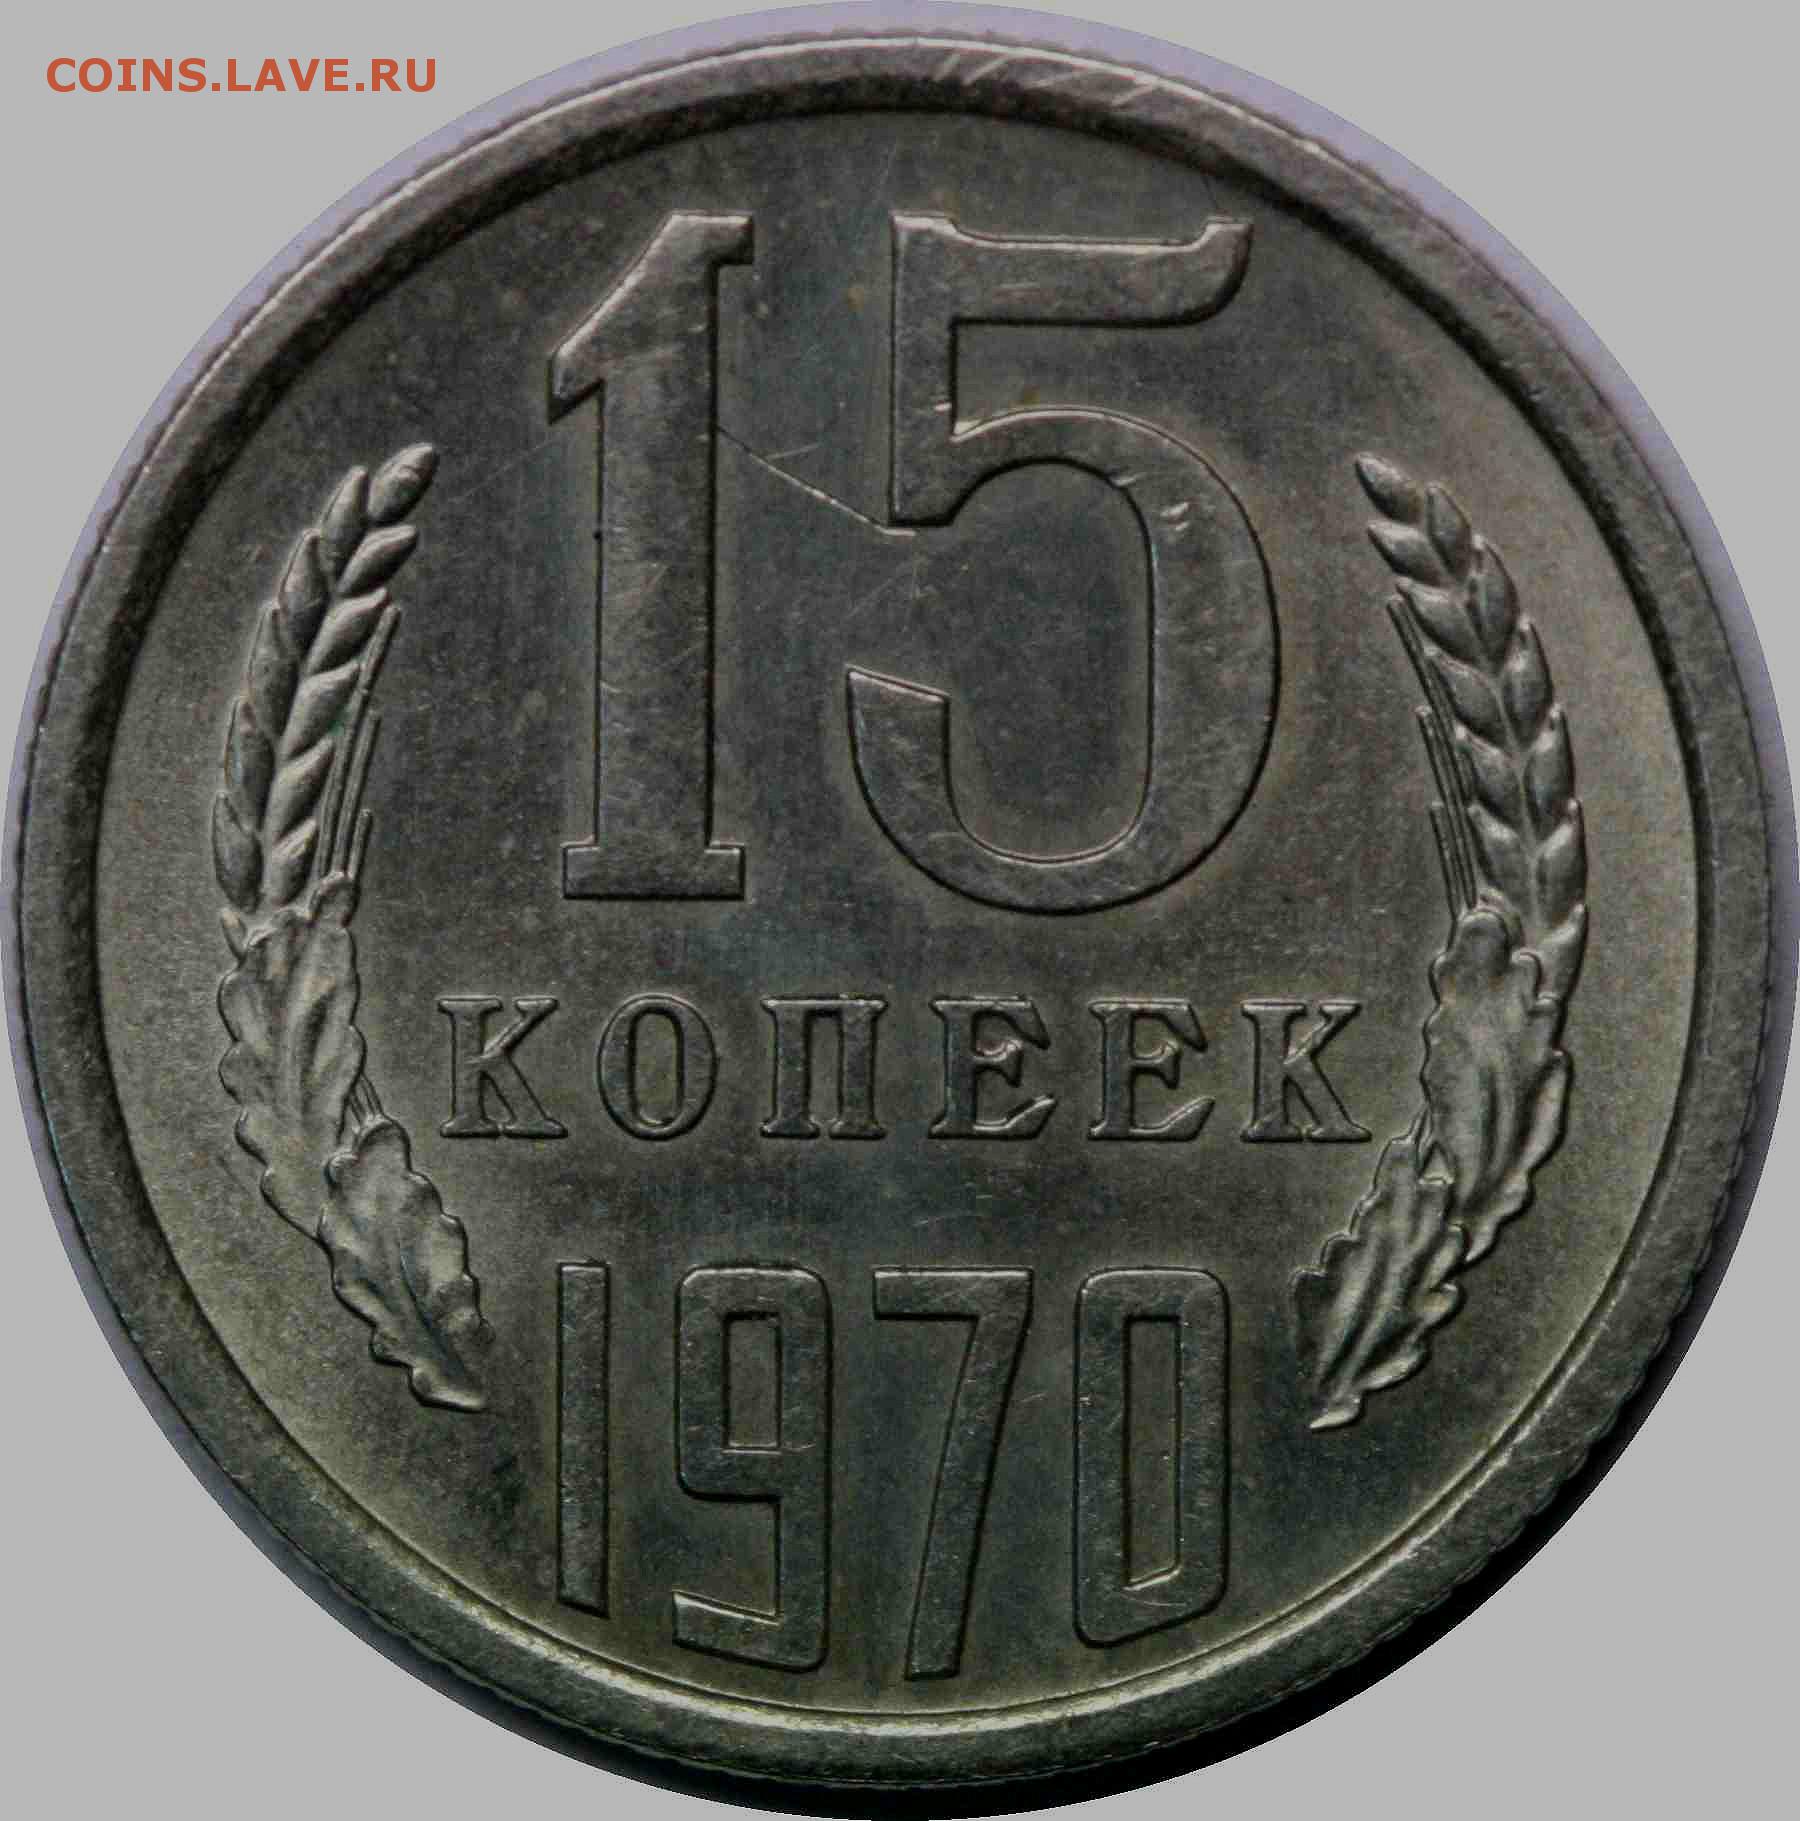 Монеты ссср 1961 1991 год цена. Монеты 15 копеек СССР 1961. СССР монета копеек 1961. 15 Копеек 1971. 15 Копеек СССР 1961 года.